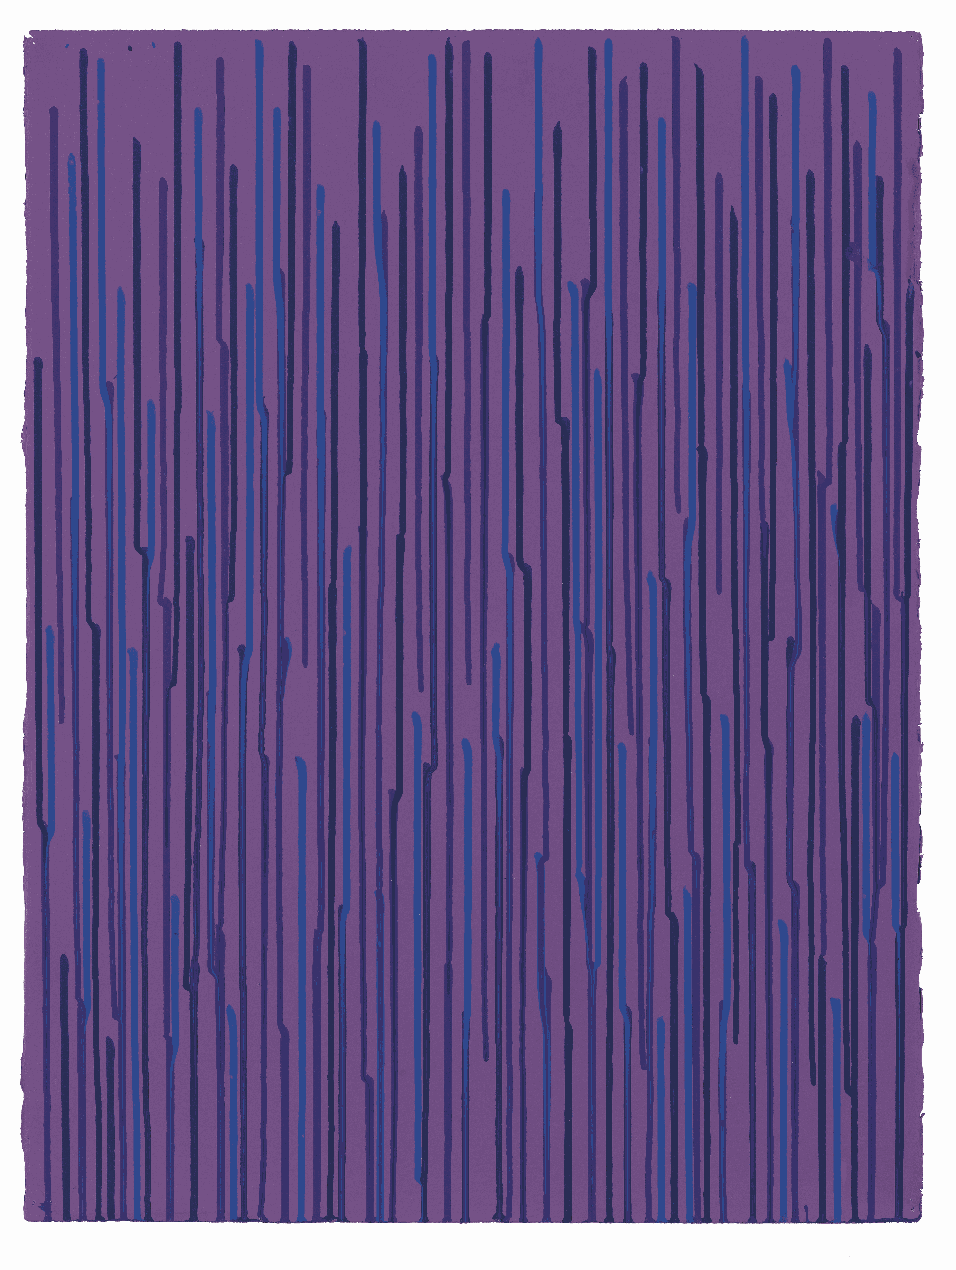 Staggered Lines: Violet, 2010